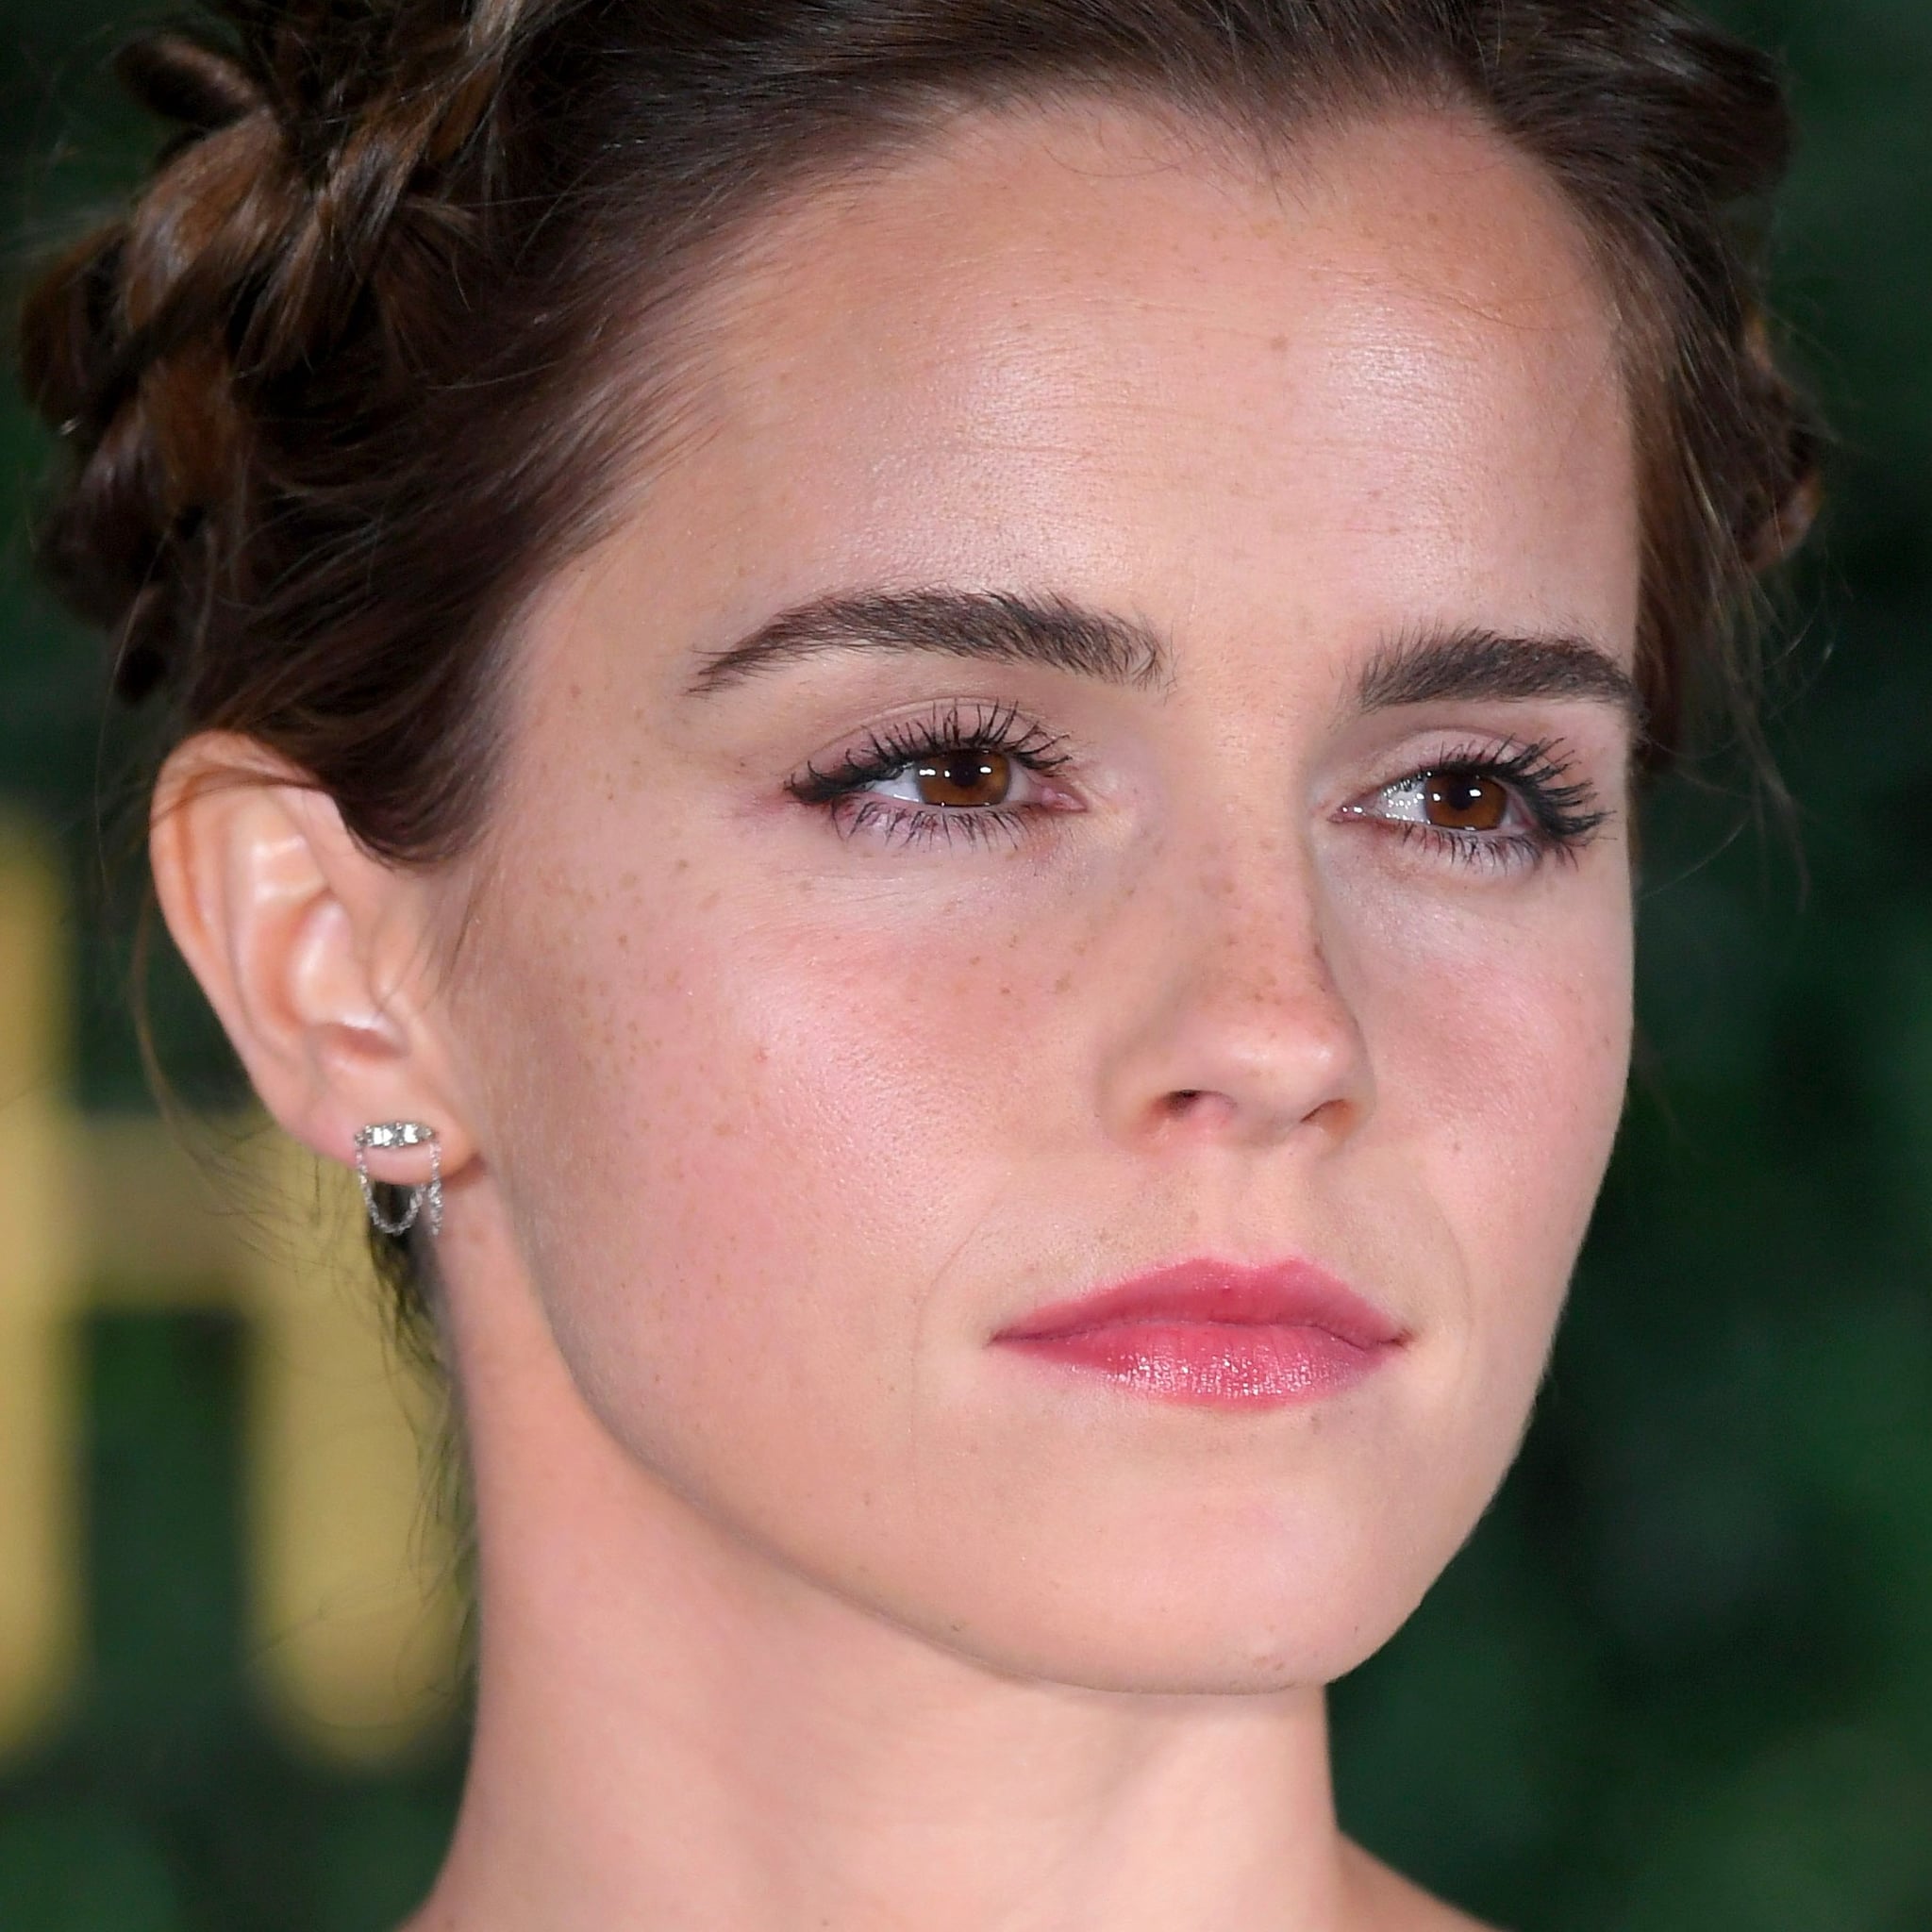 Emma Watson Beauty And The Beast Makeup Feb 23 17 Popsugar Beauty